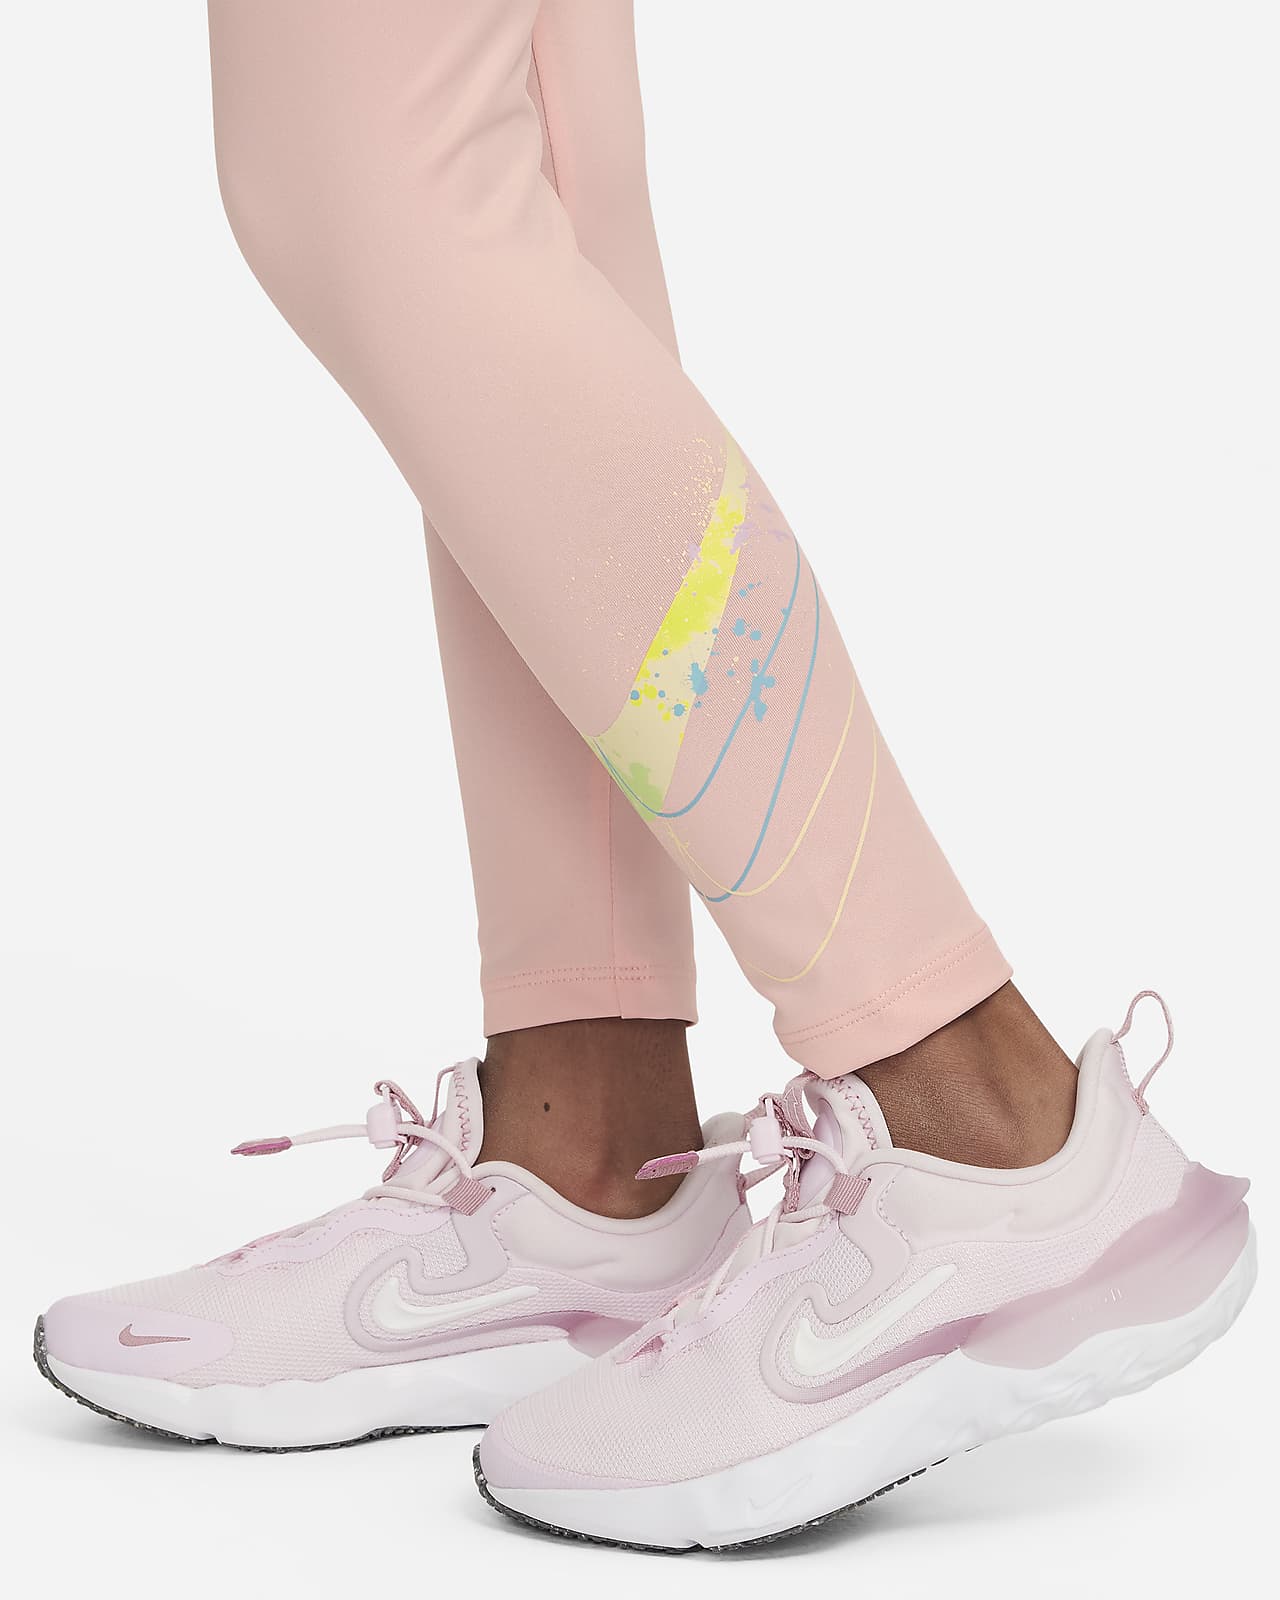 Leggings Nike Elastico Just Do It Bambina 3UC723